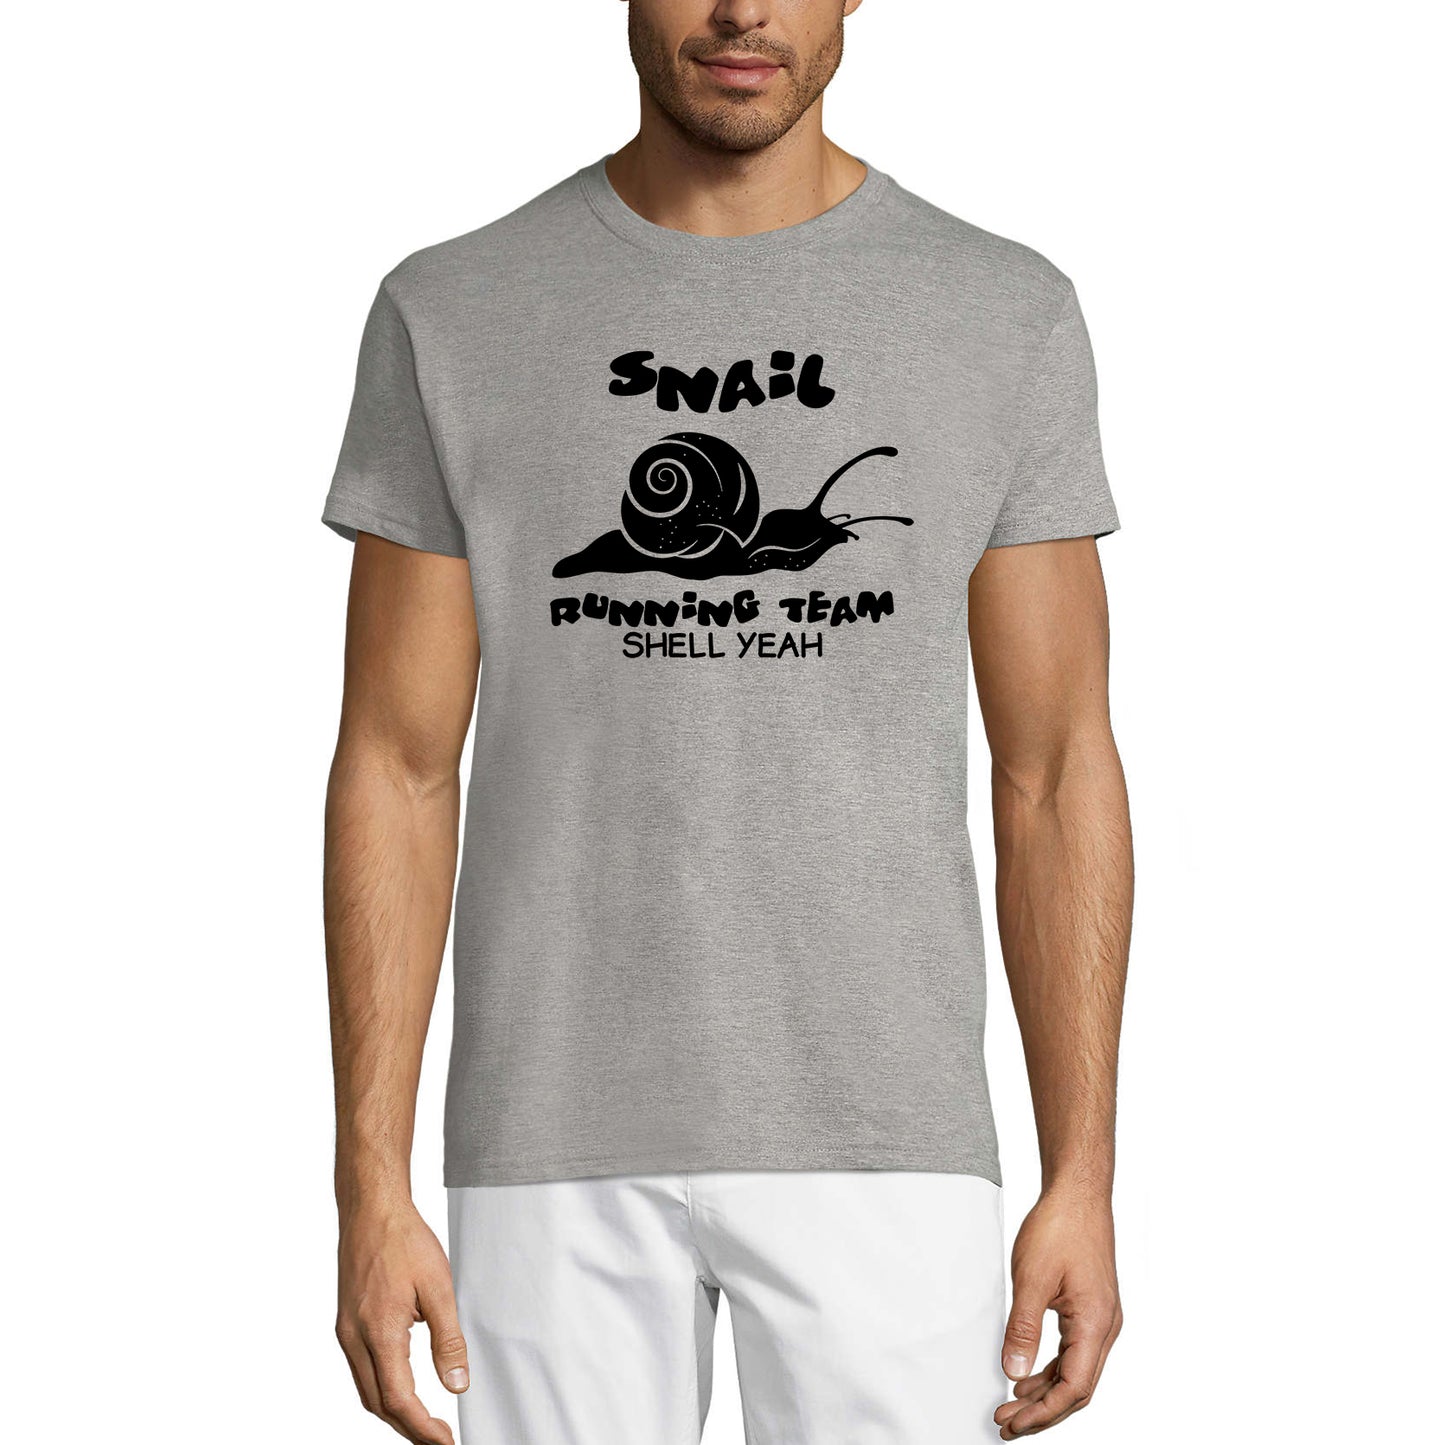 ULTRABASIC Men's Novelty T-Shirt Snail Running Team Shell Yeah - Funny Runner Tee Shirt